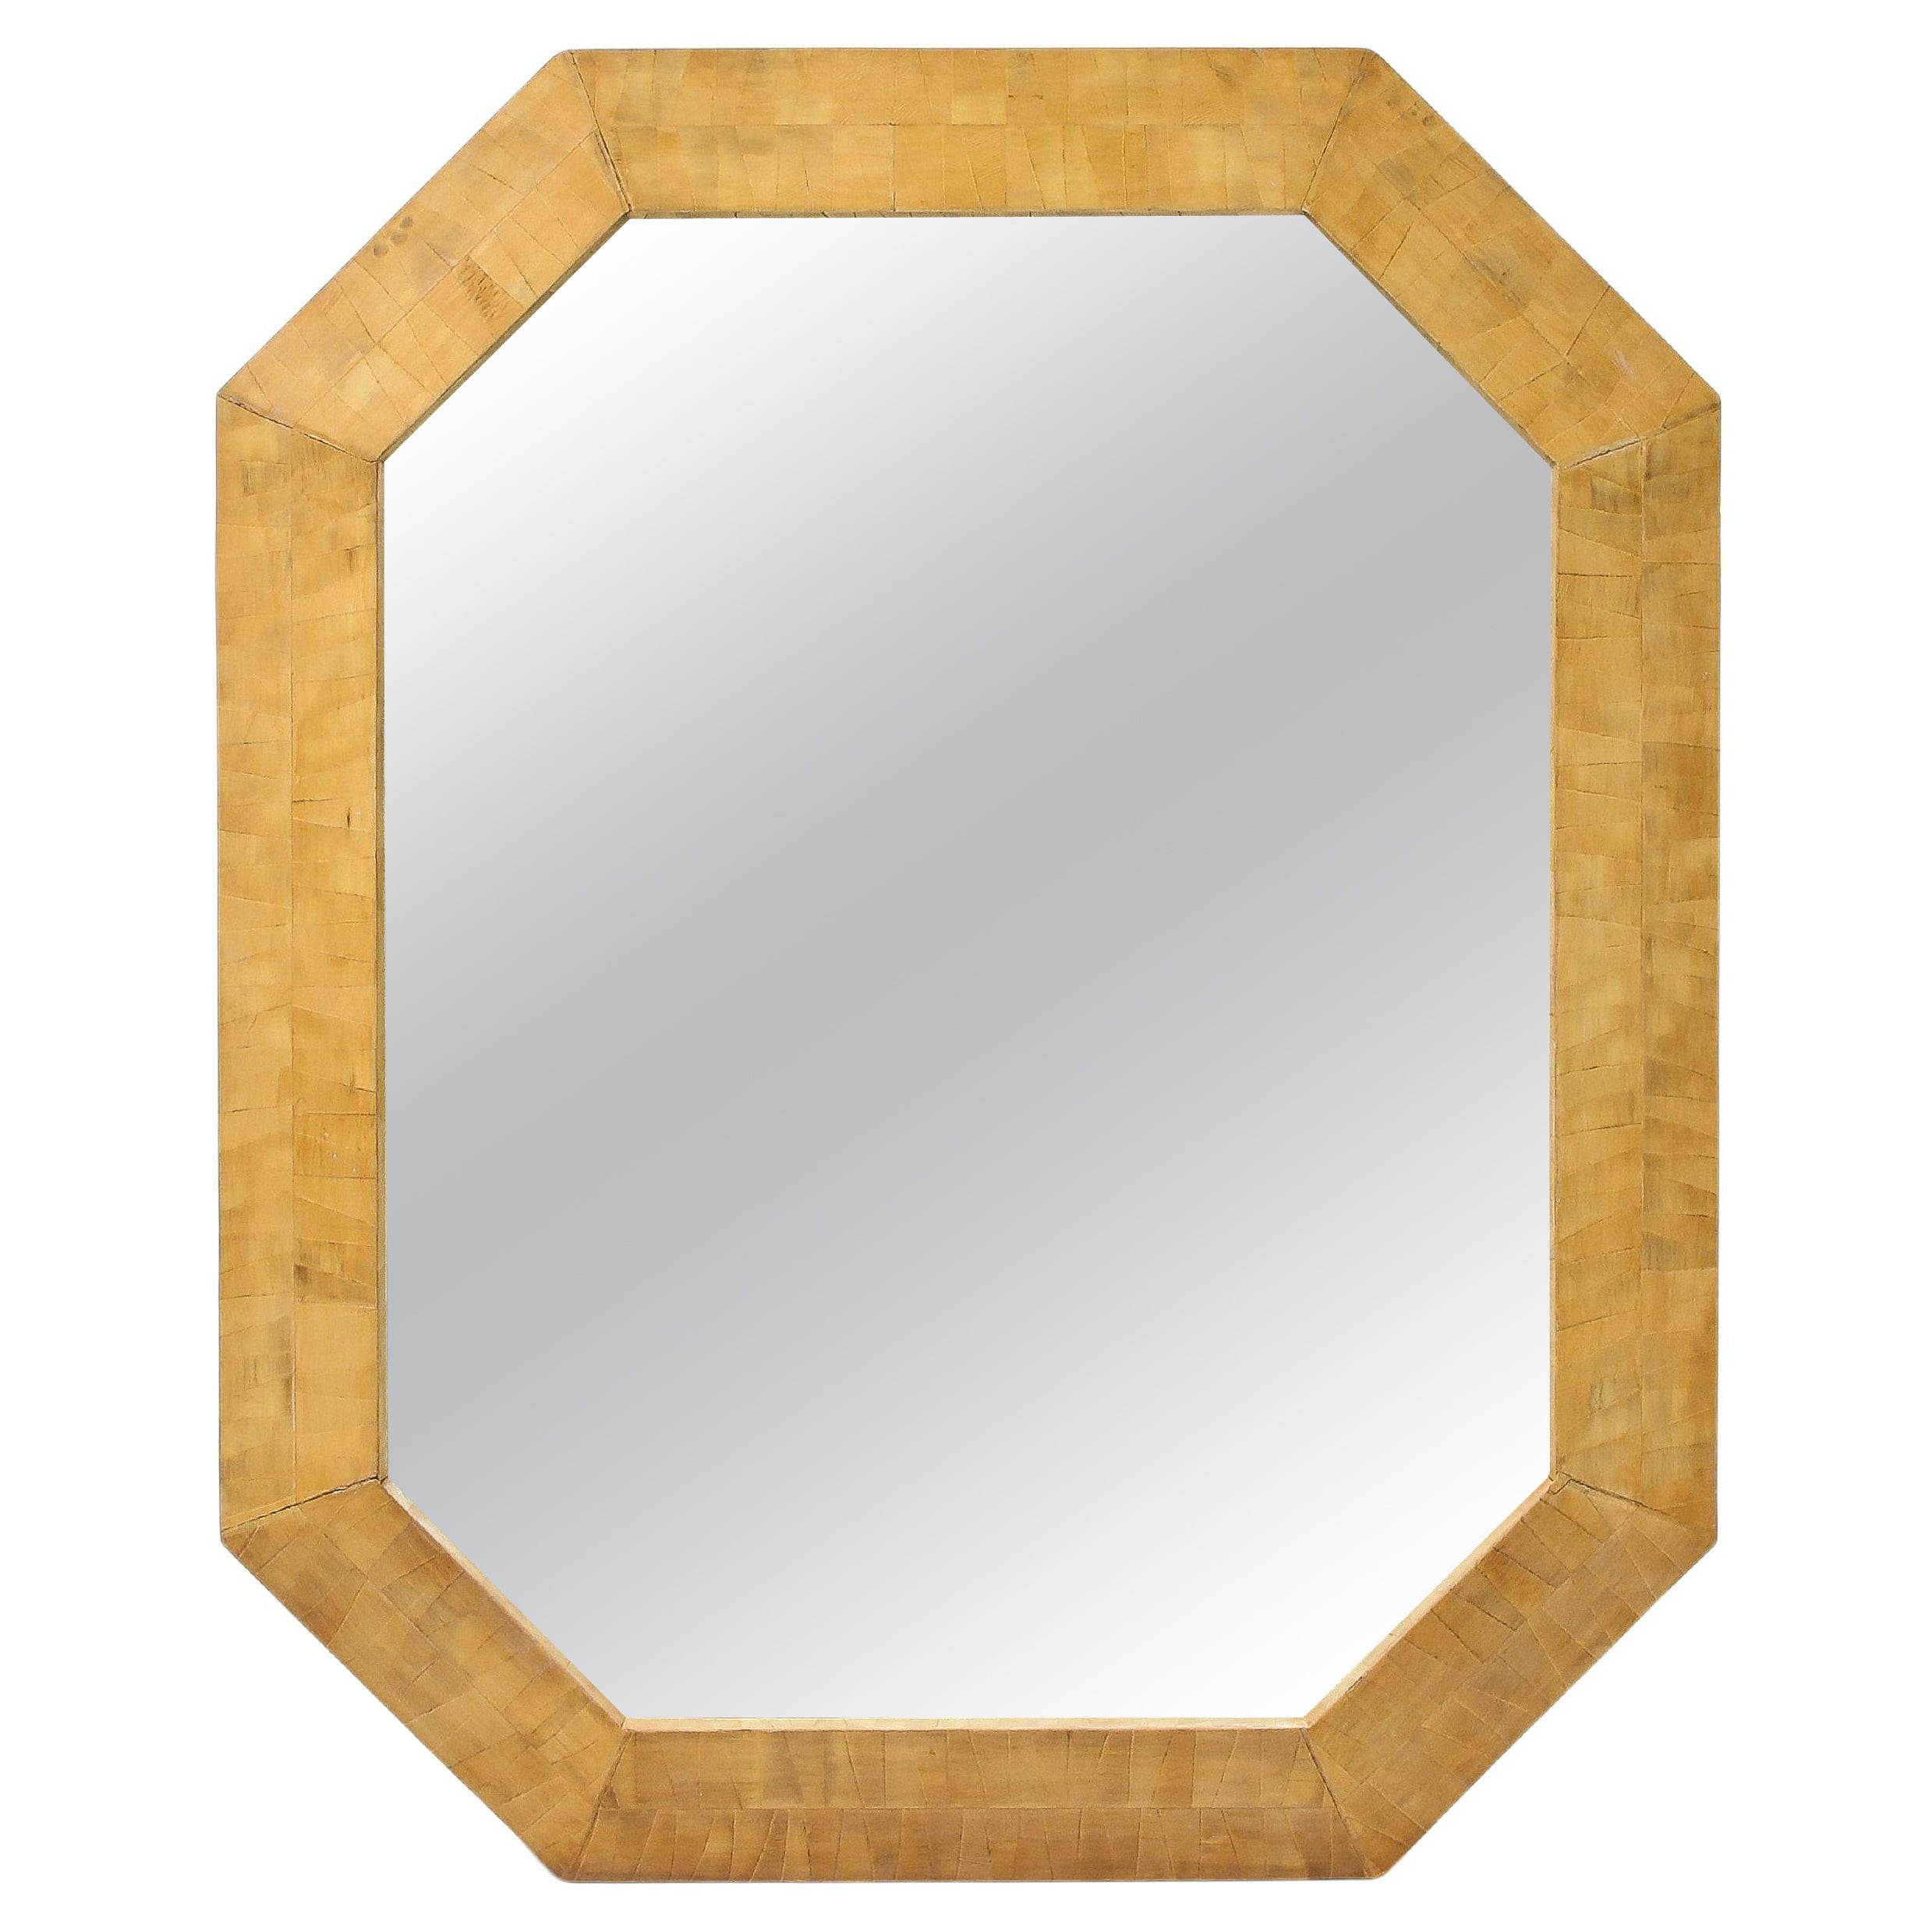 Monumental  Wooden Parquetry Framed Mirror.